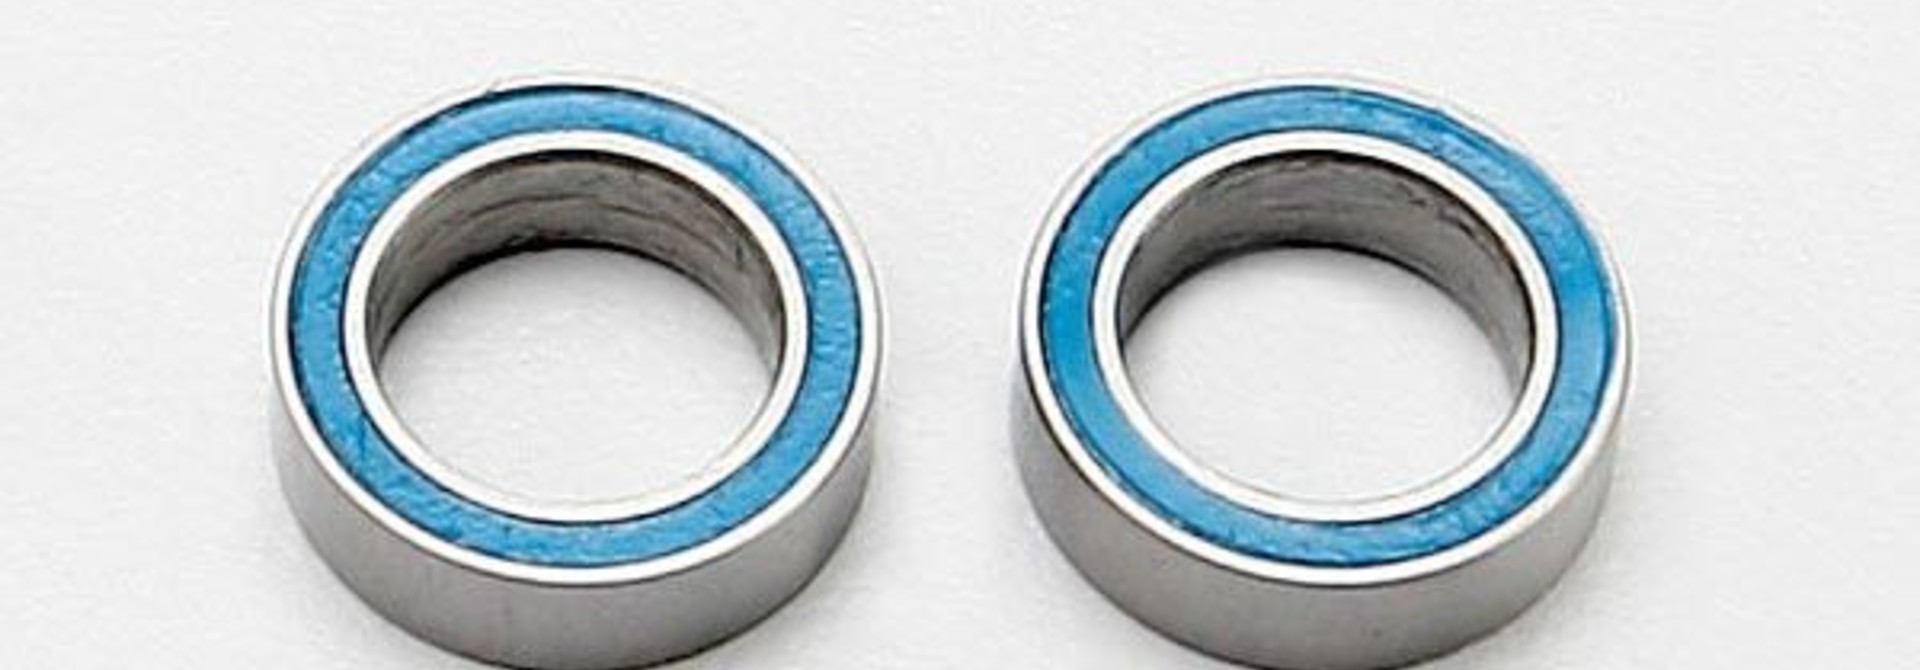 Ball bearings, blue rubber sealed (8x12x3.5mm) (2), TRX7020